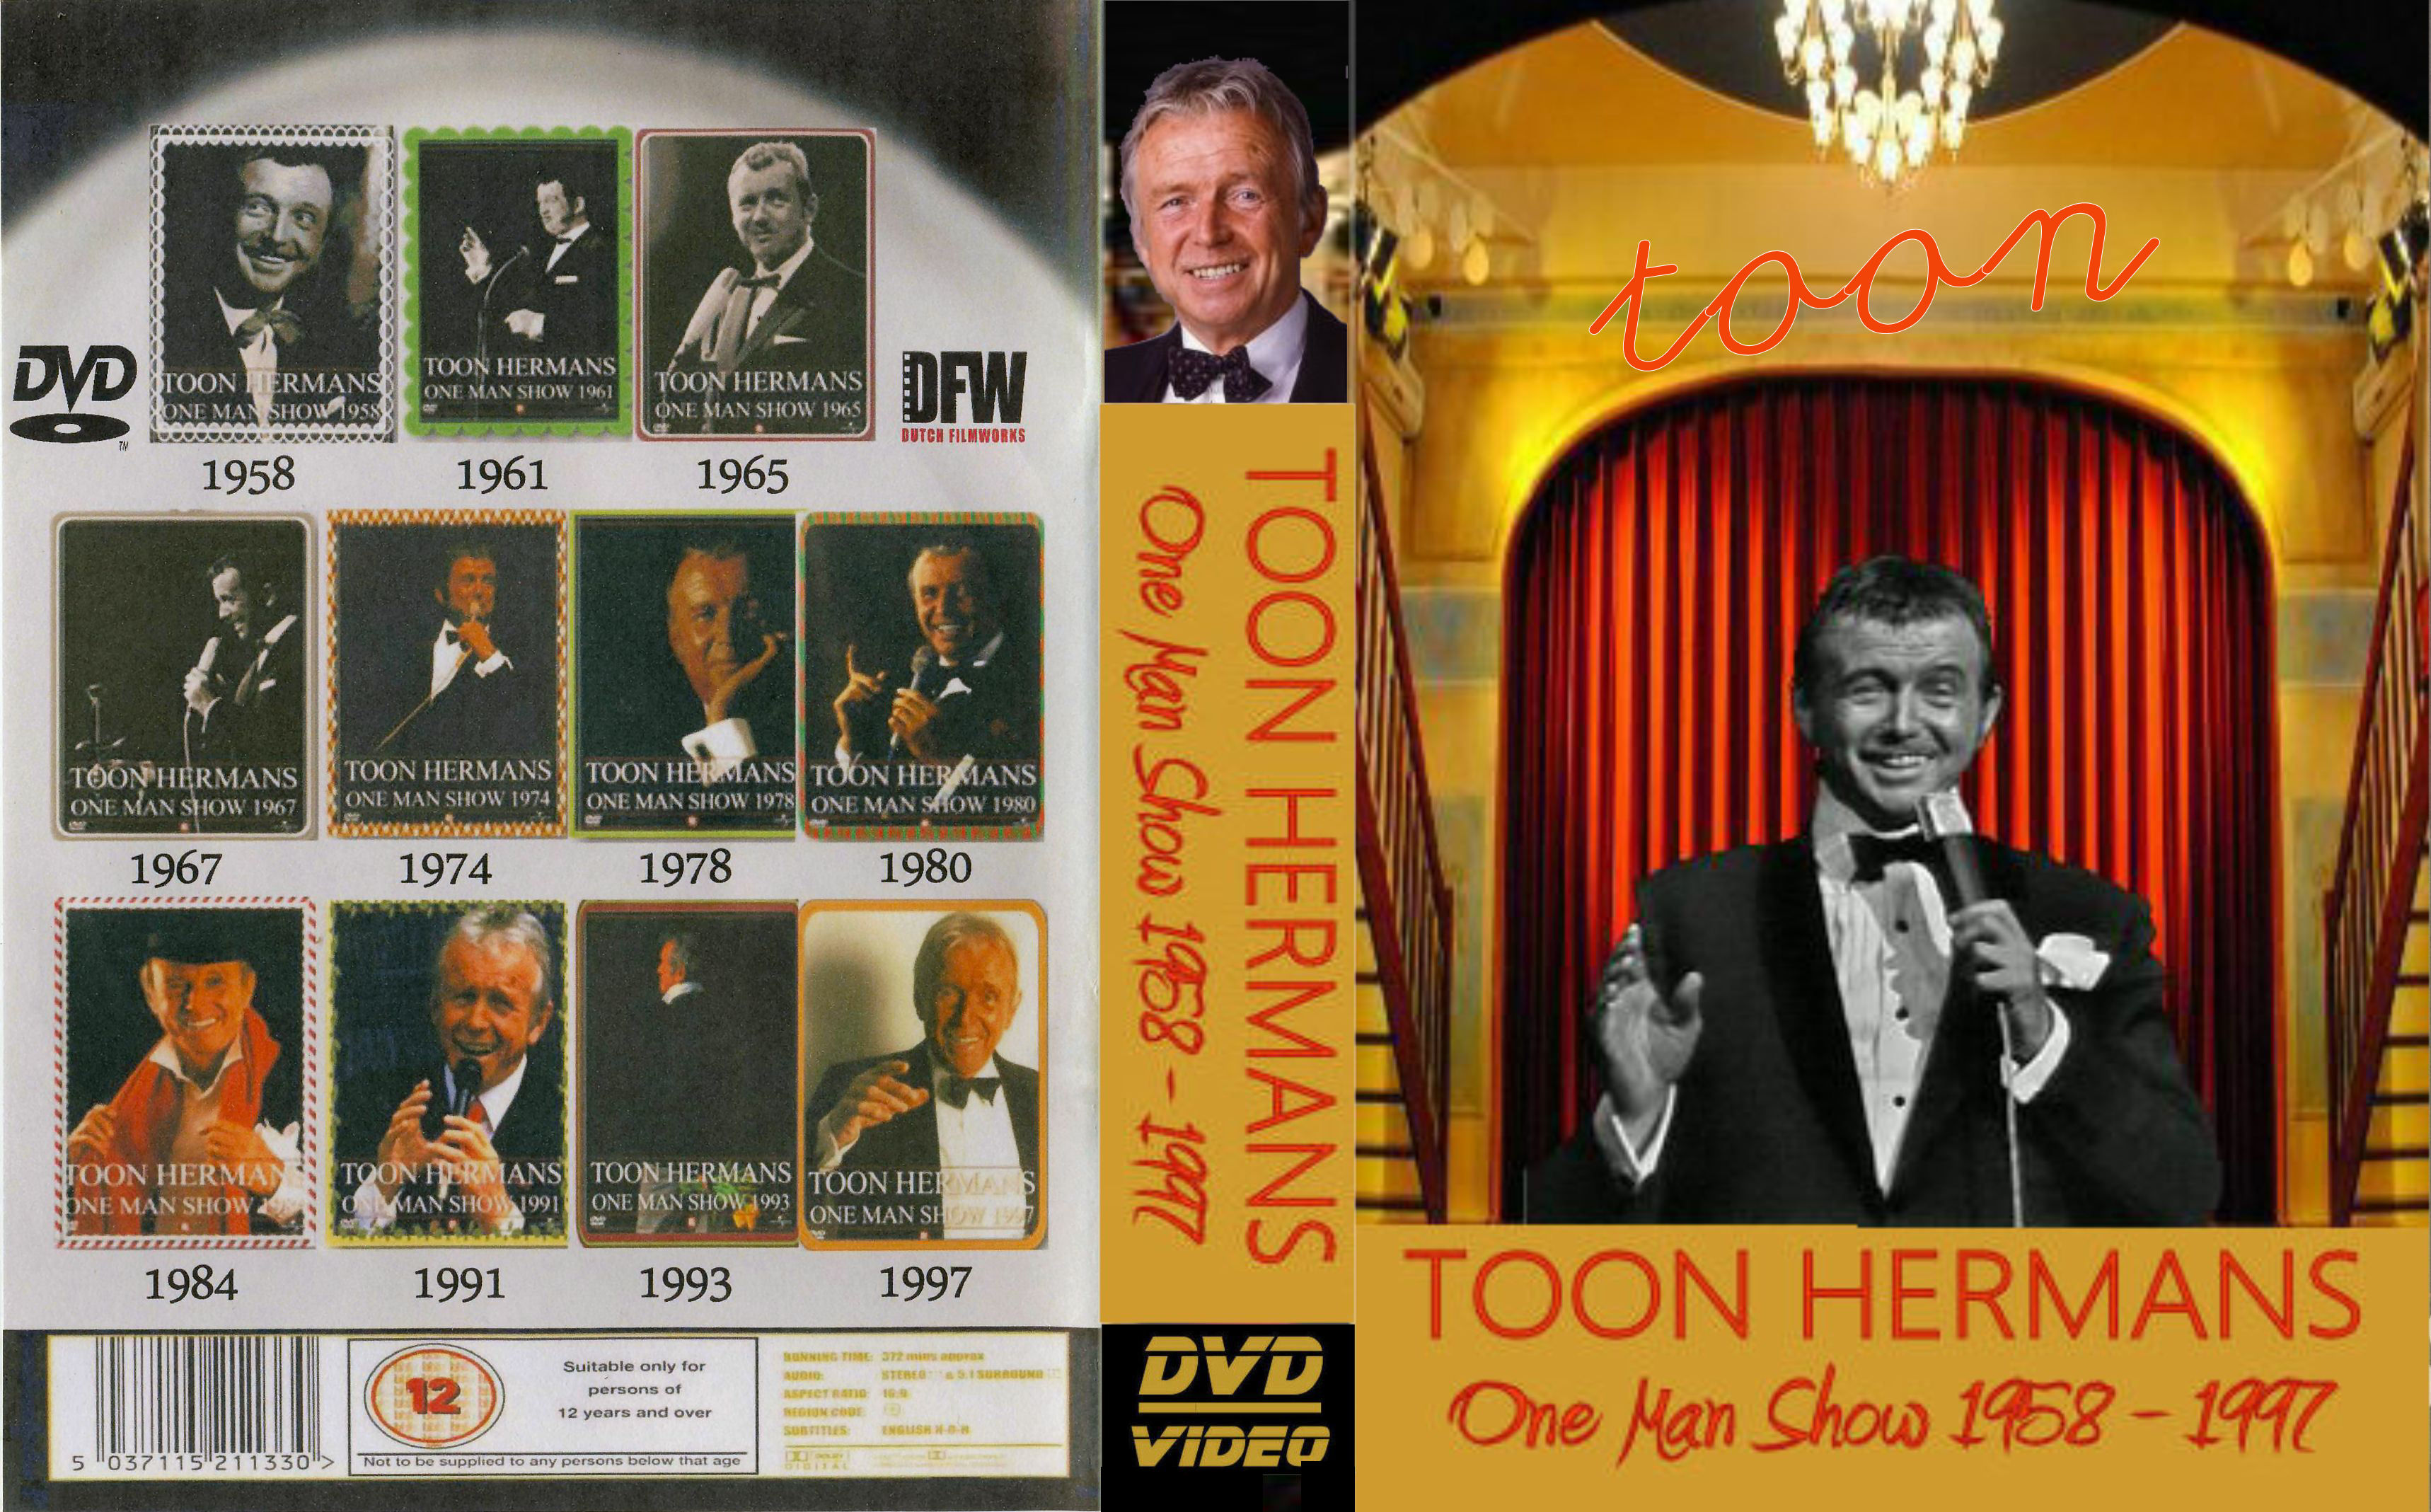 Toon Hermans One Man Show 1958 - 1997 - DvD 5 (1974)